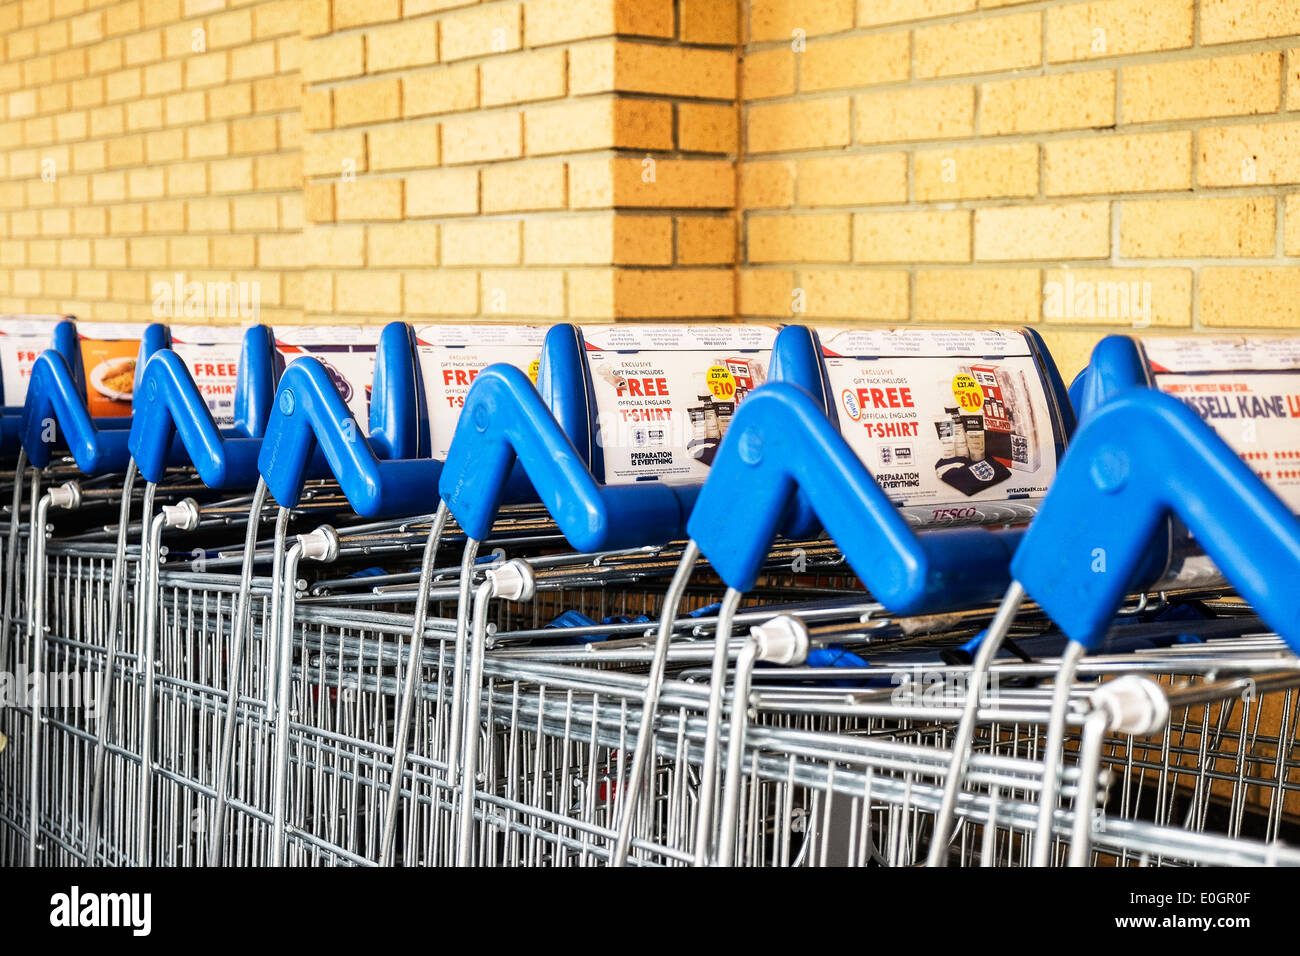 Shopping trolleys trollies stacked outside a Tesco supermarket. Stock Photo